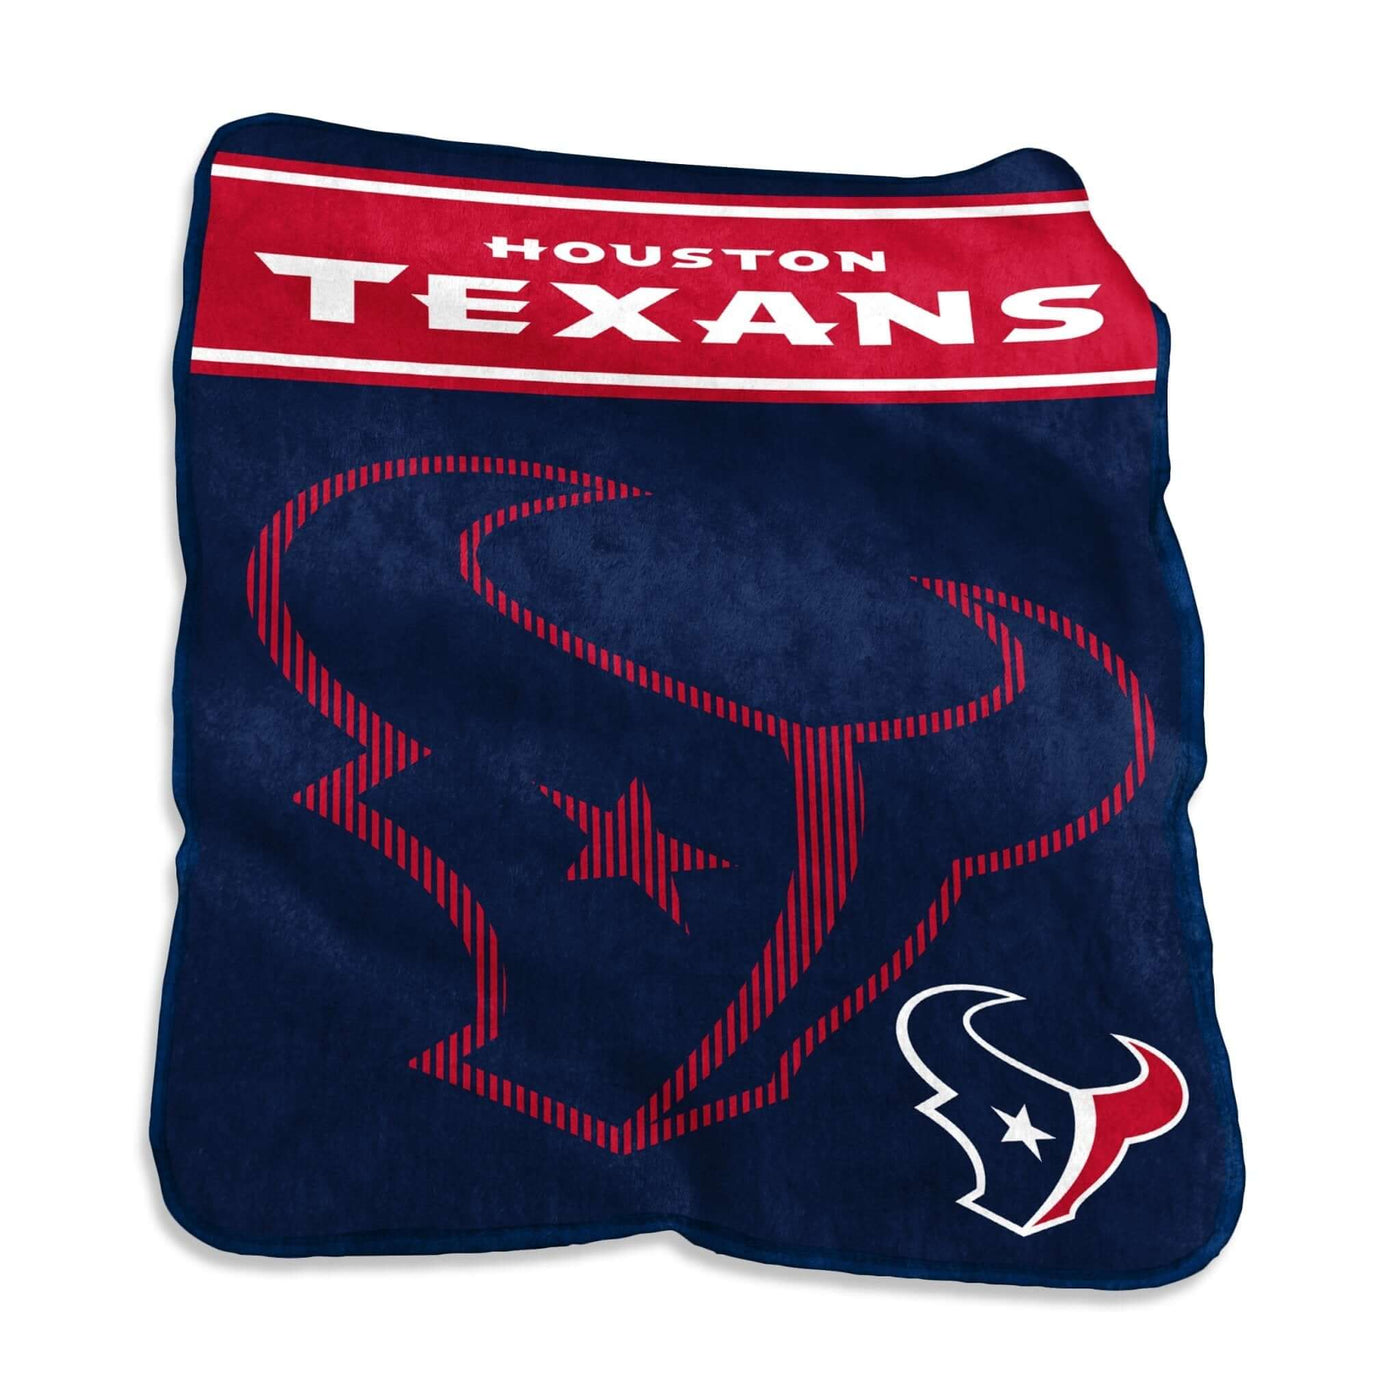 Houston Texans 60x80 Raschel Throw - Logo Brands